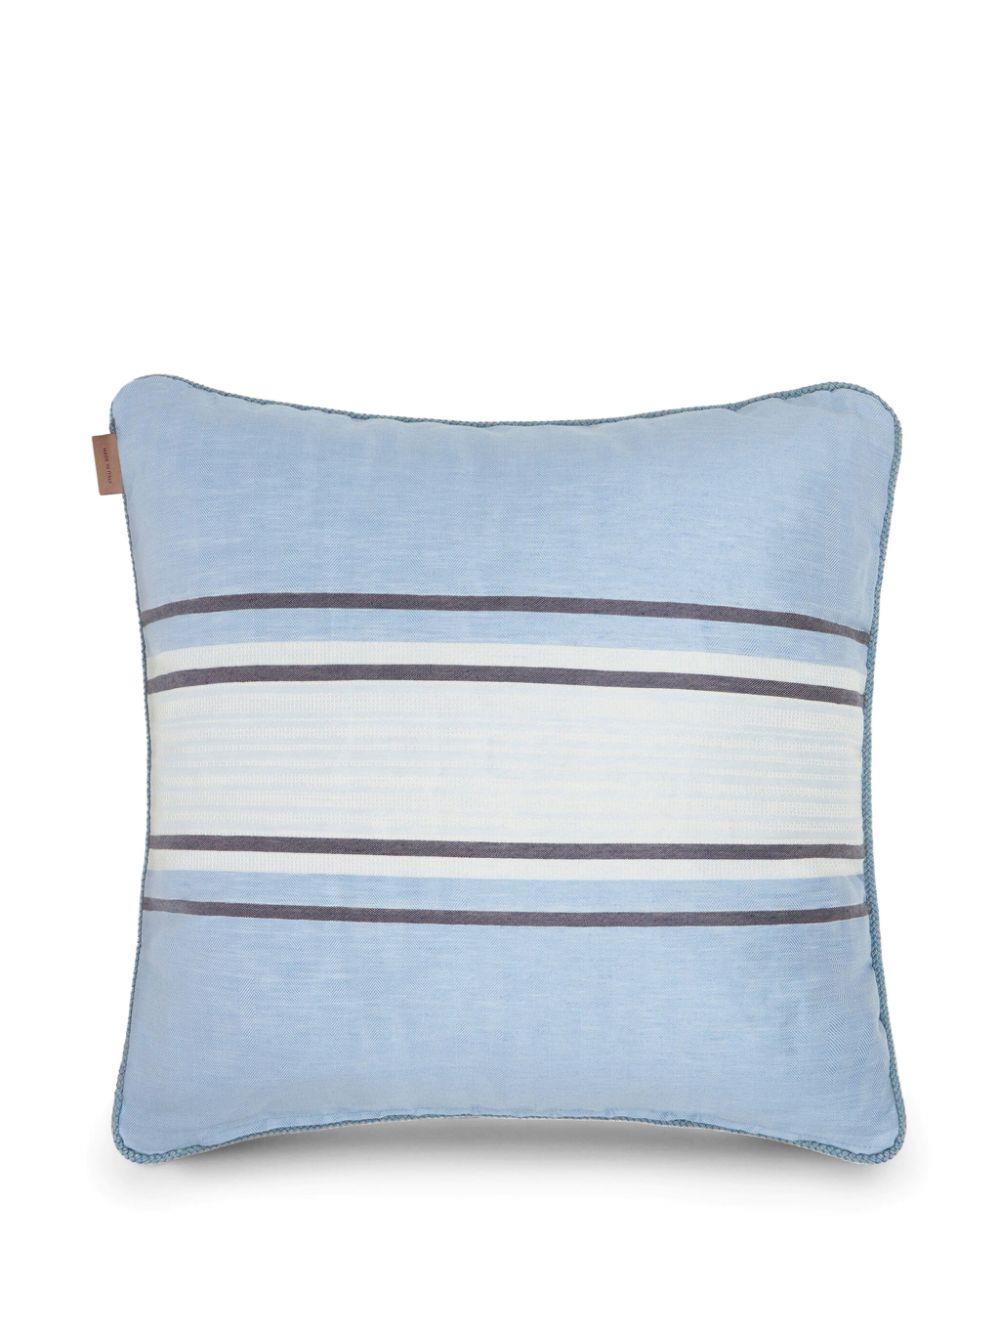 ETRO Pegaso logo cushion (45cm x 45cm) - Blue